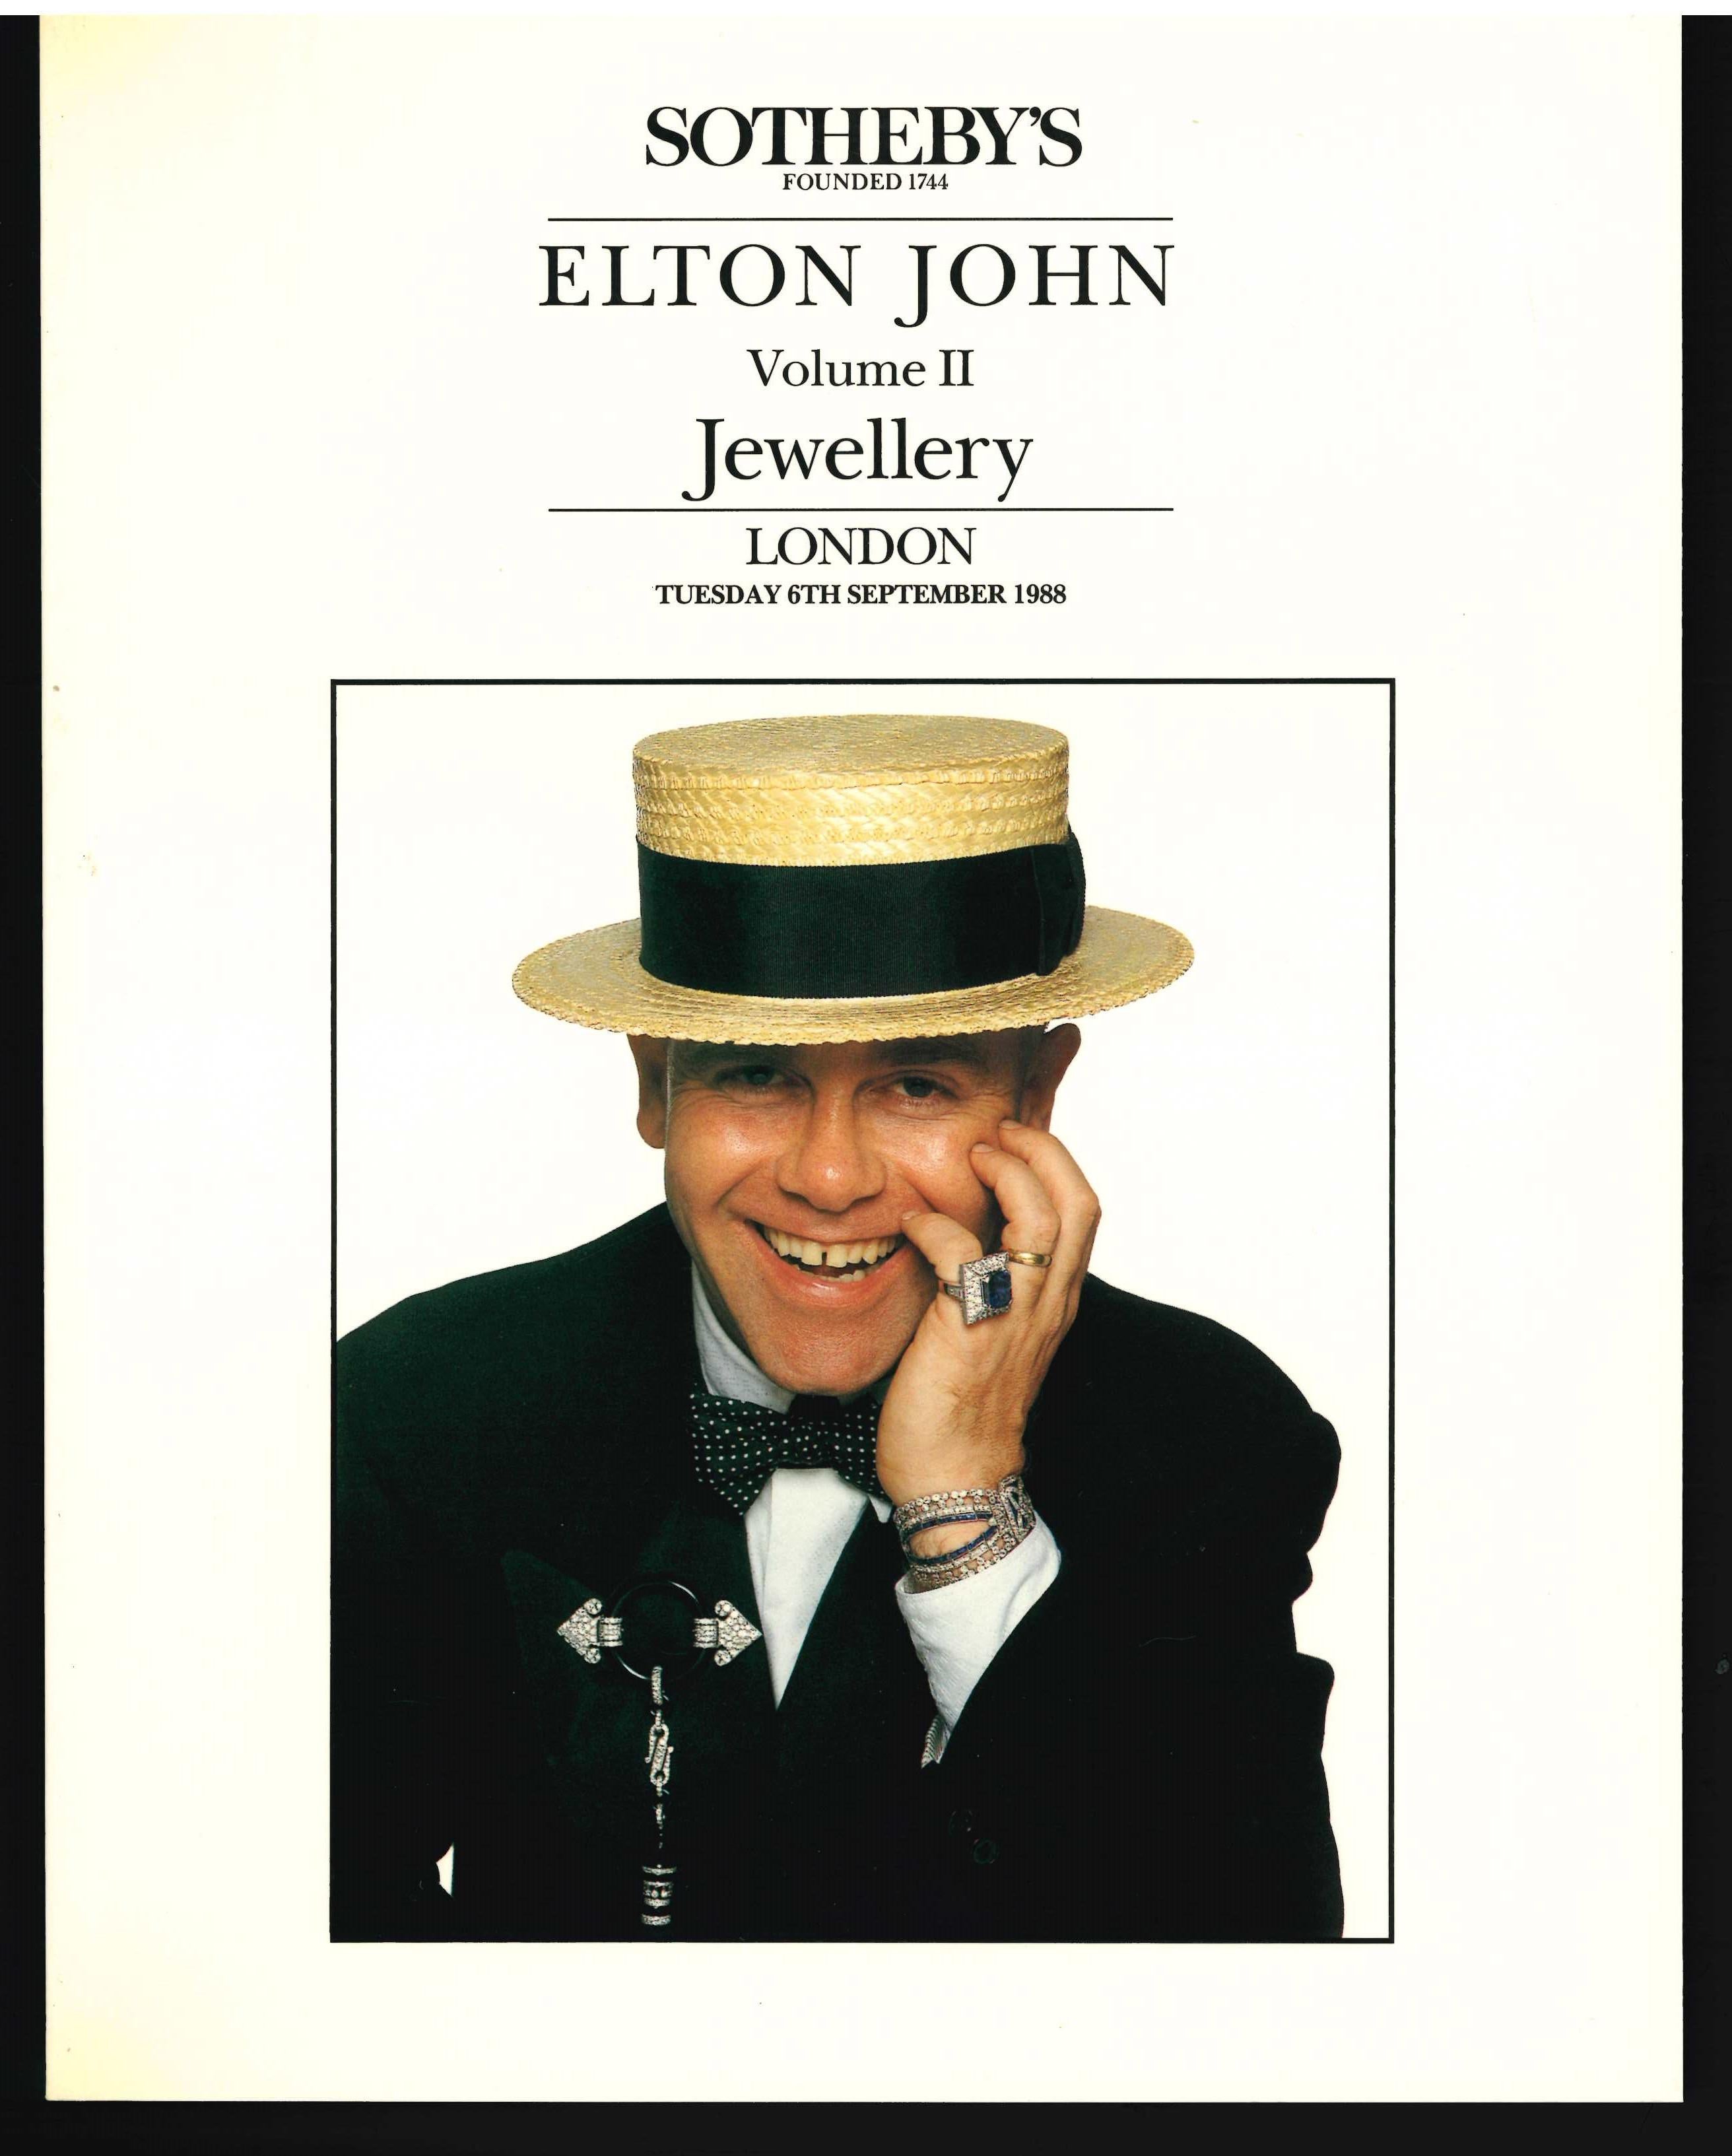 elton john sotheby's catalogue